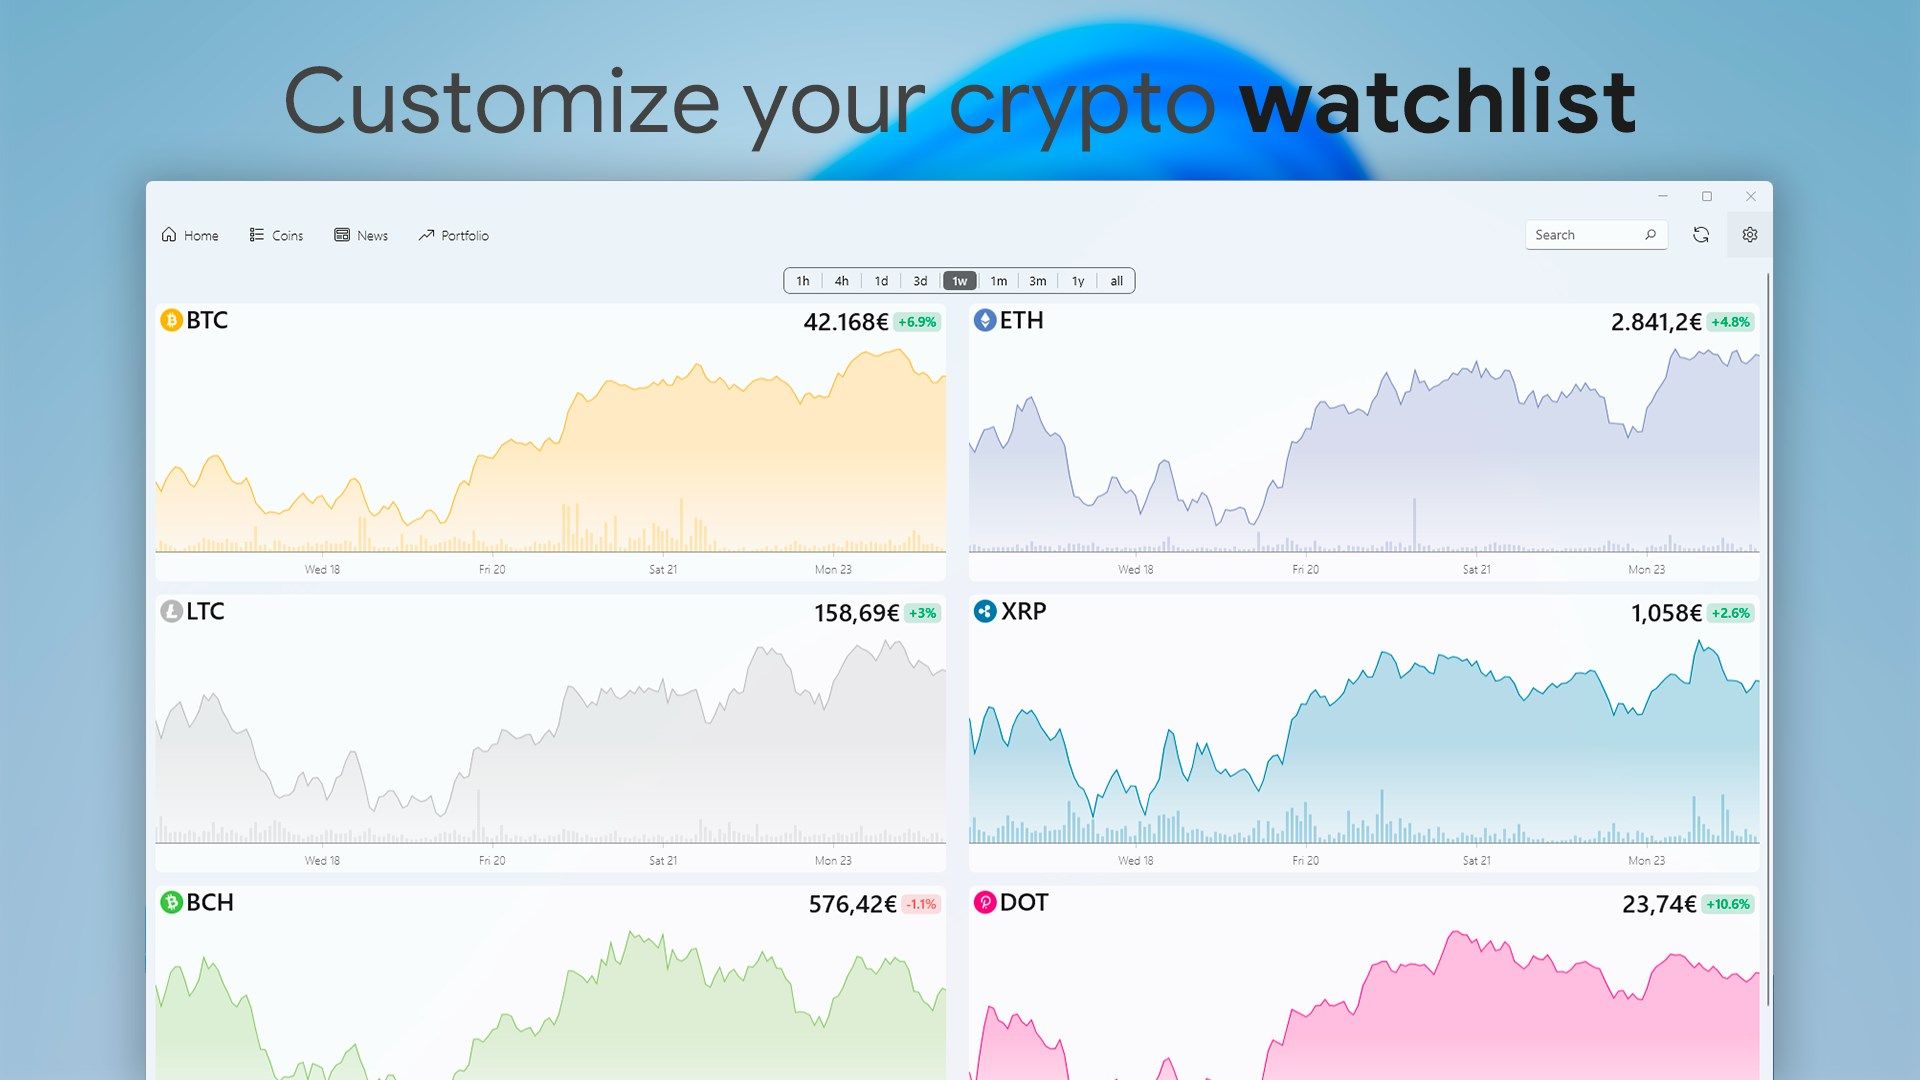 Customize your crypto watchlist